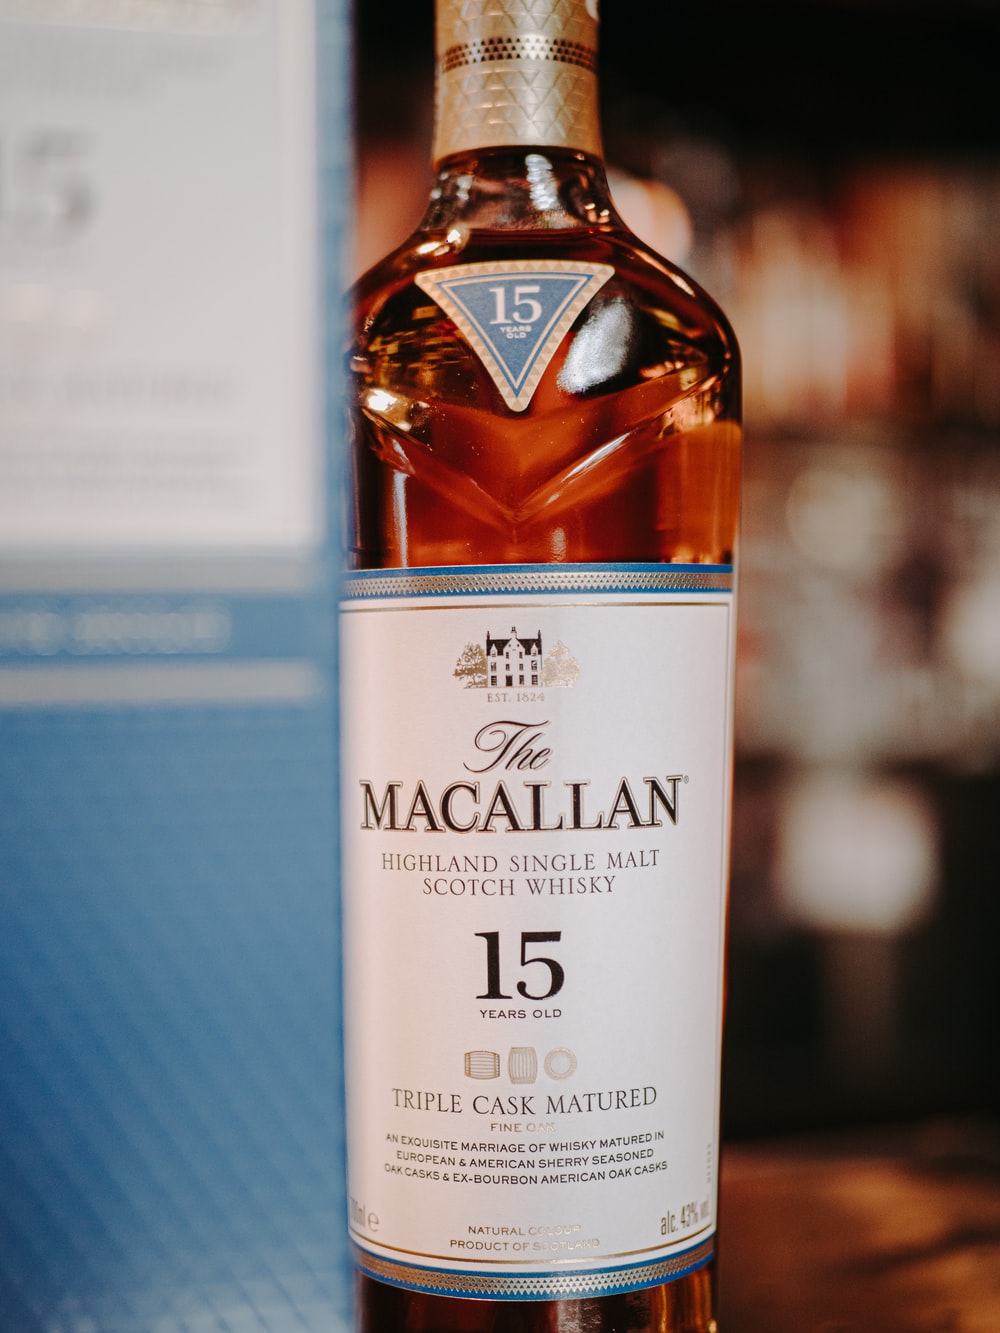 The Macallan Highland Single Malt Scotch Whisky Bottle Photo